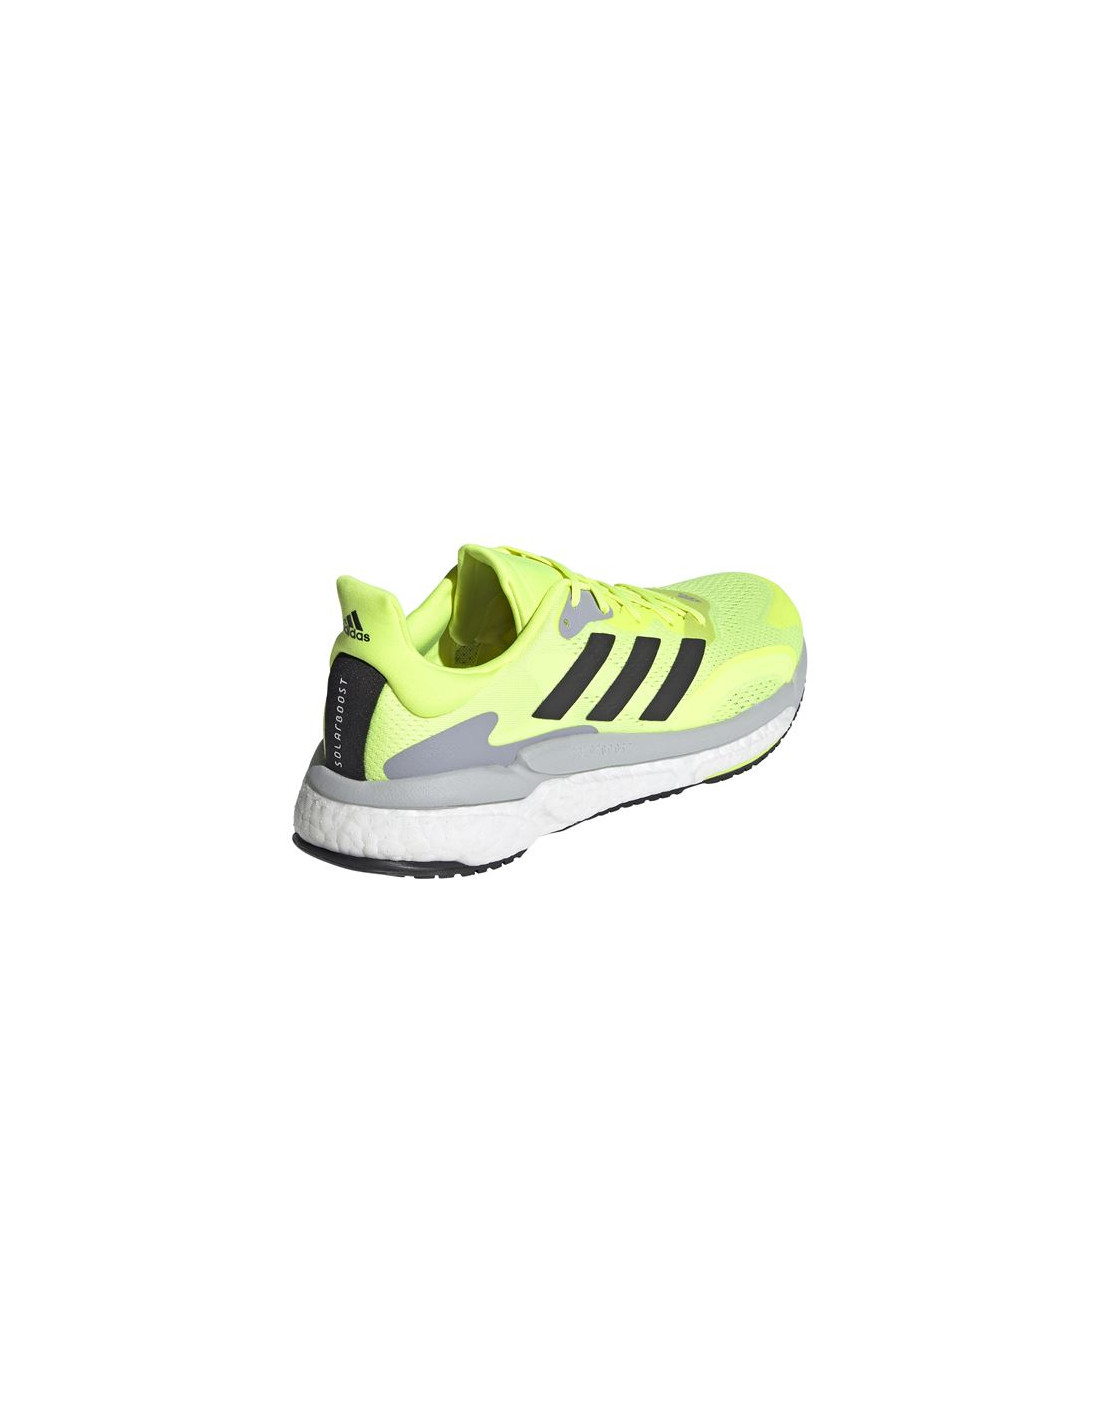 Dato Chispa  chispear Combatiente ᐈ Zapatillas de running adidas Solarboost 3 – Atmosfera Sport©